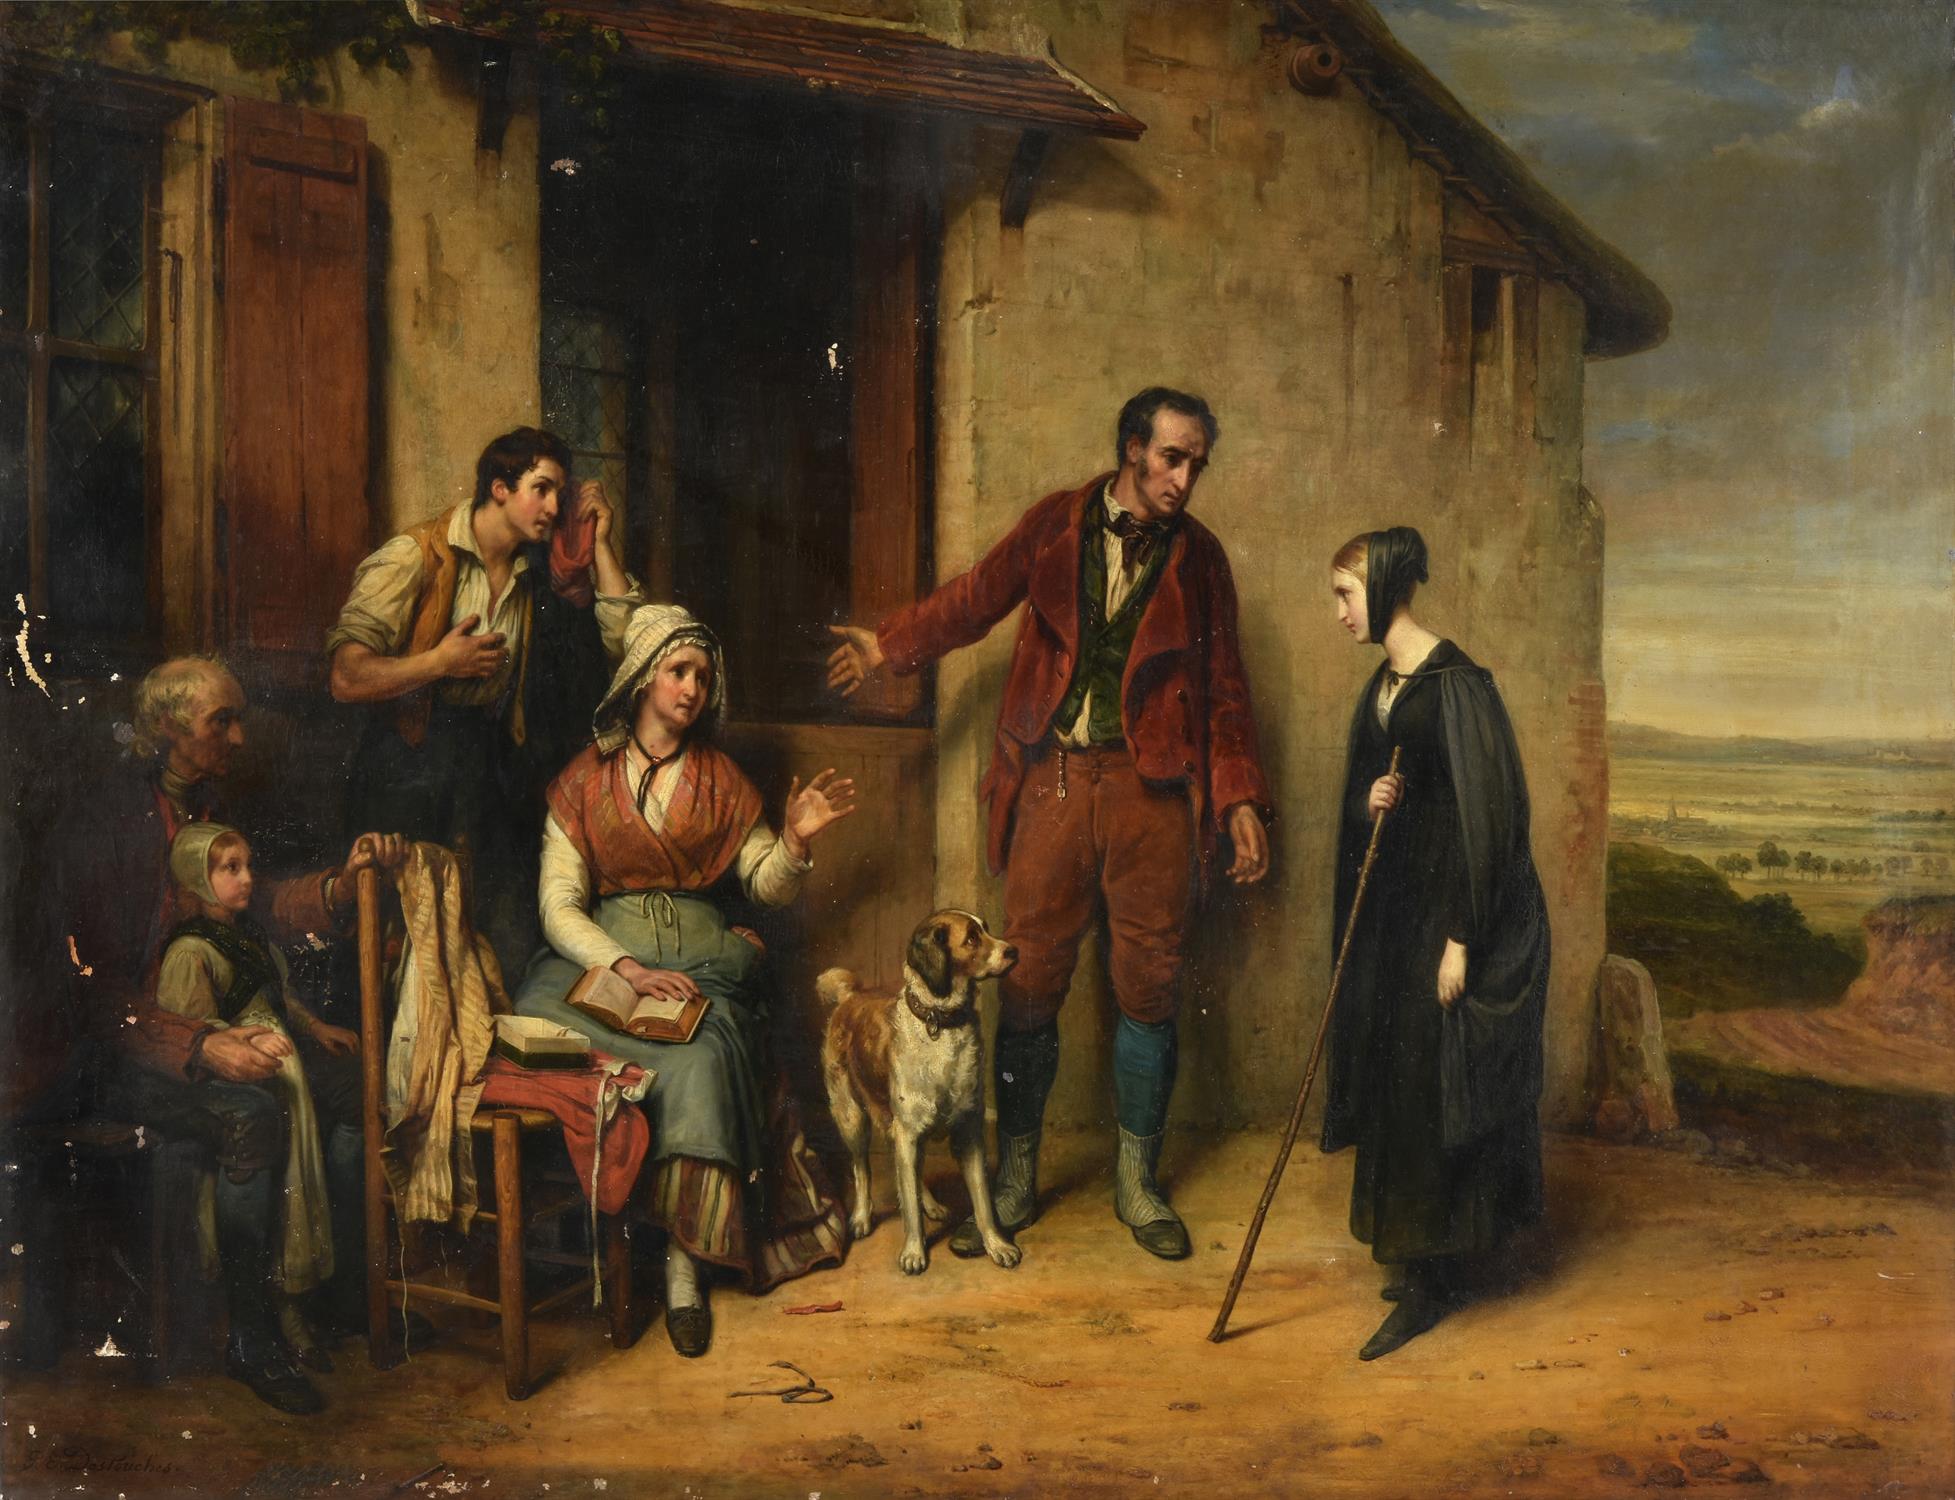 Paul Emile Destouches (French 1794-1874), The good Samaritans